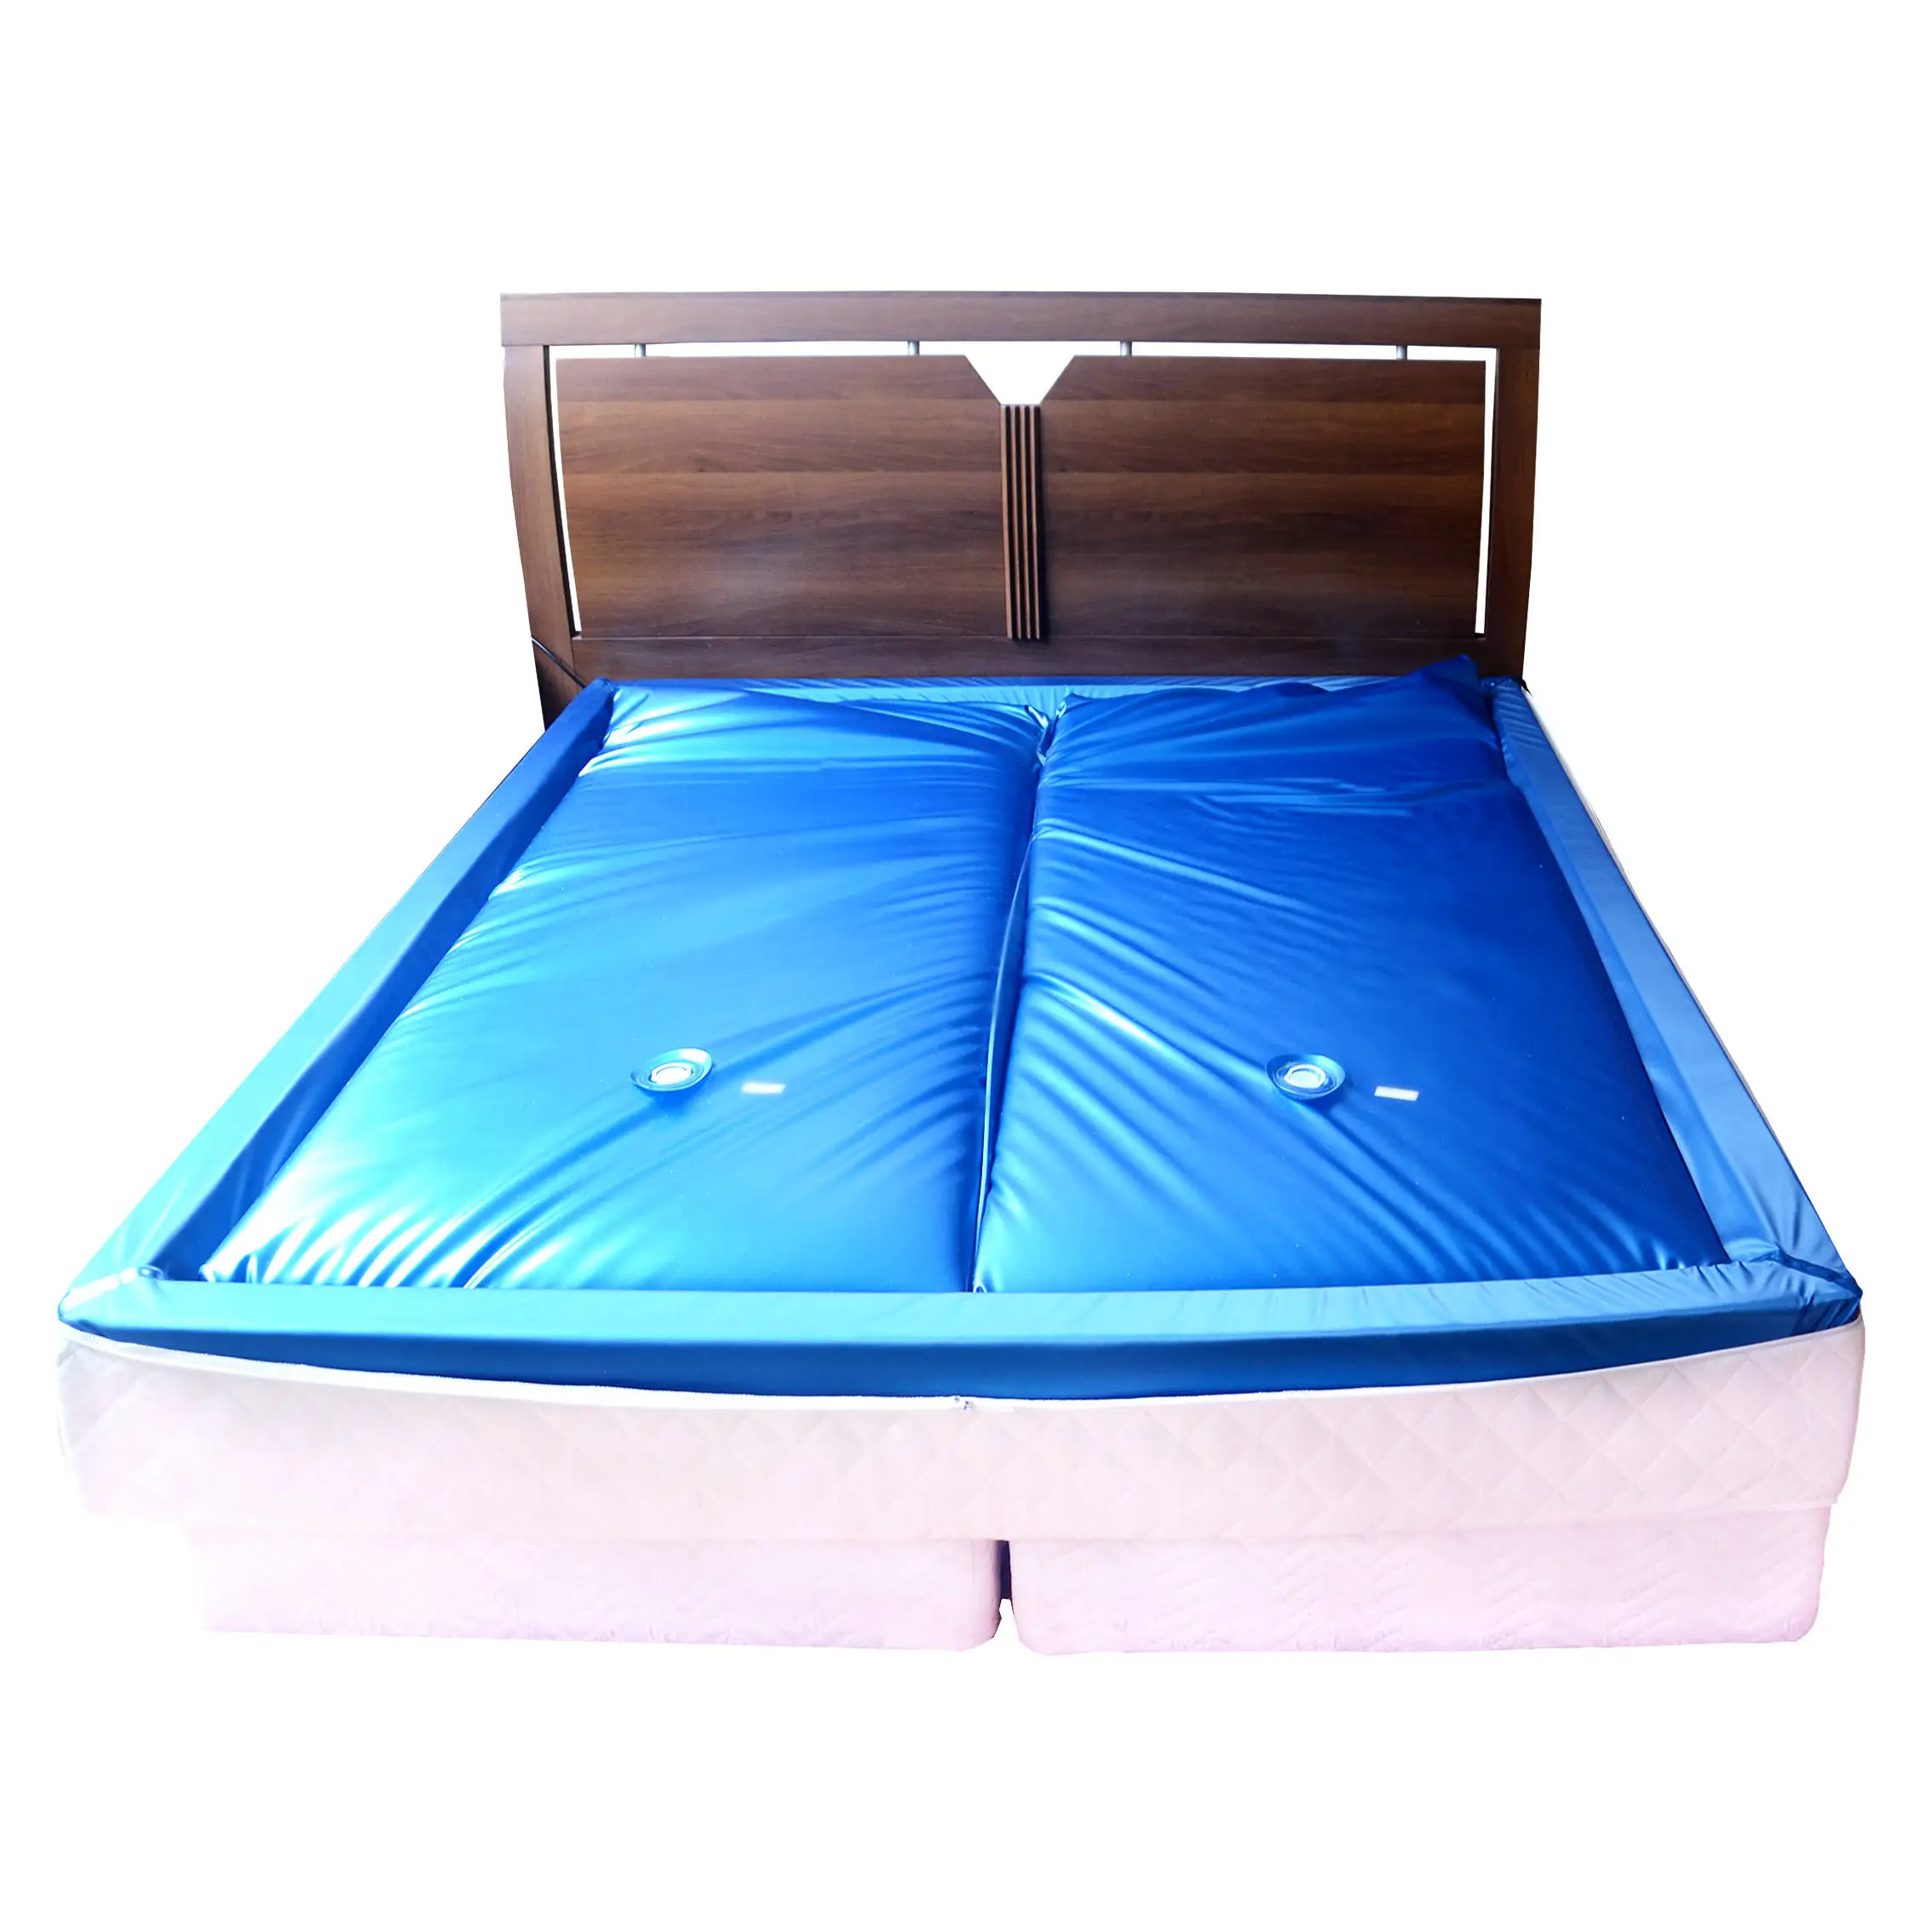 bestrating Pech Hoofd Wholesale Zachte kant waterbed matras beste water bed From m.alibaba.com